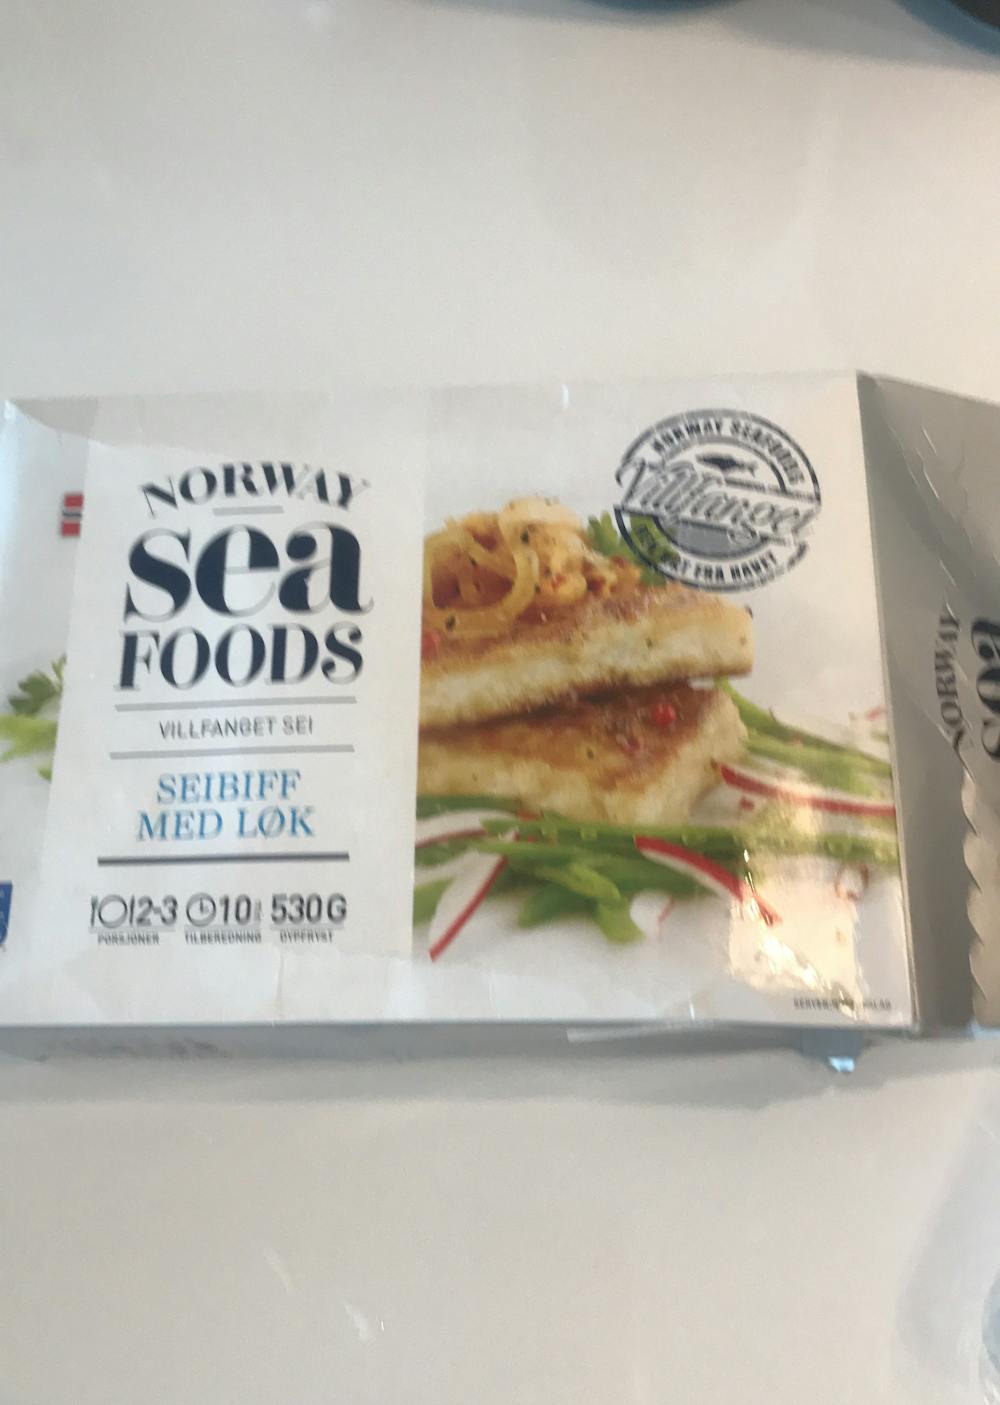 Seibiff med løk, Norway sea foods